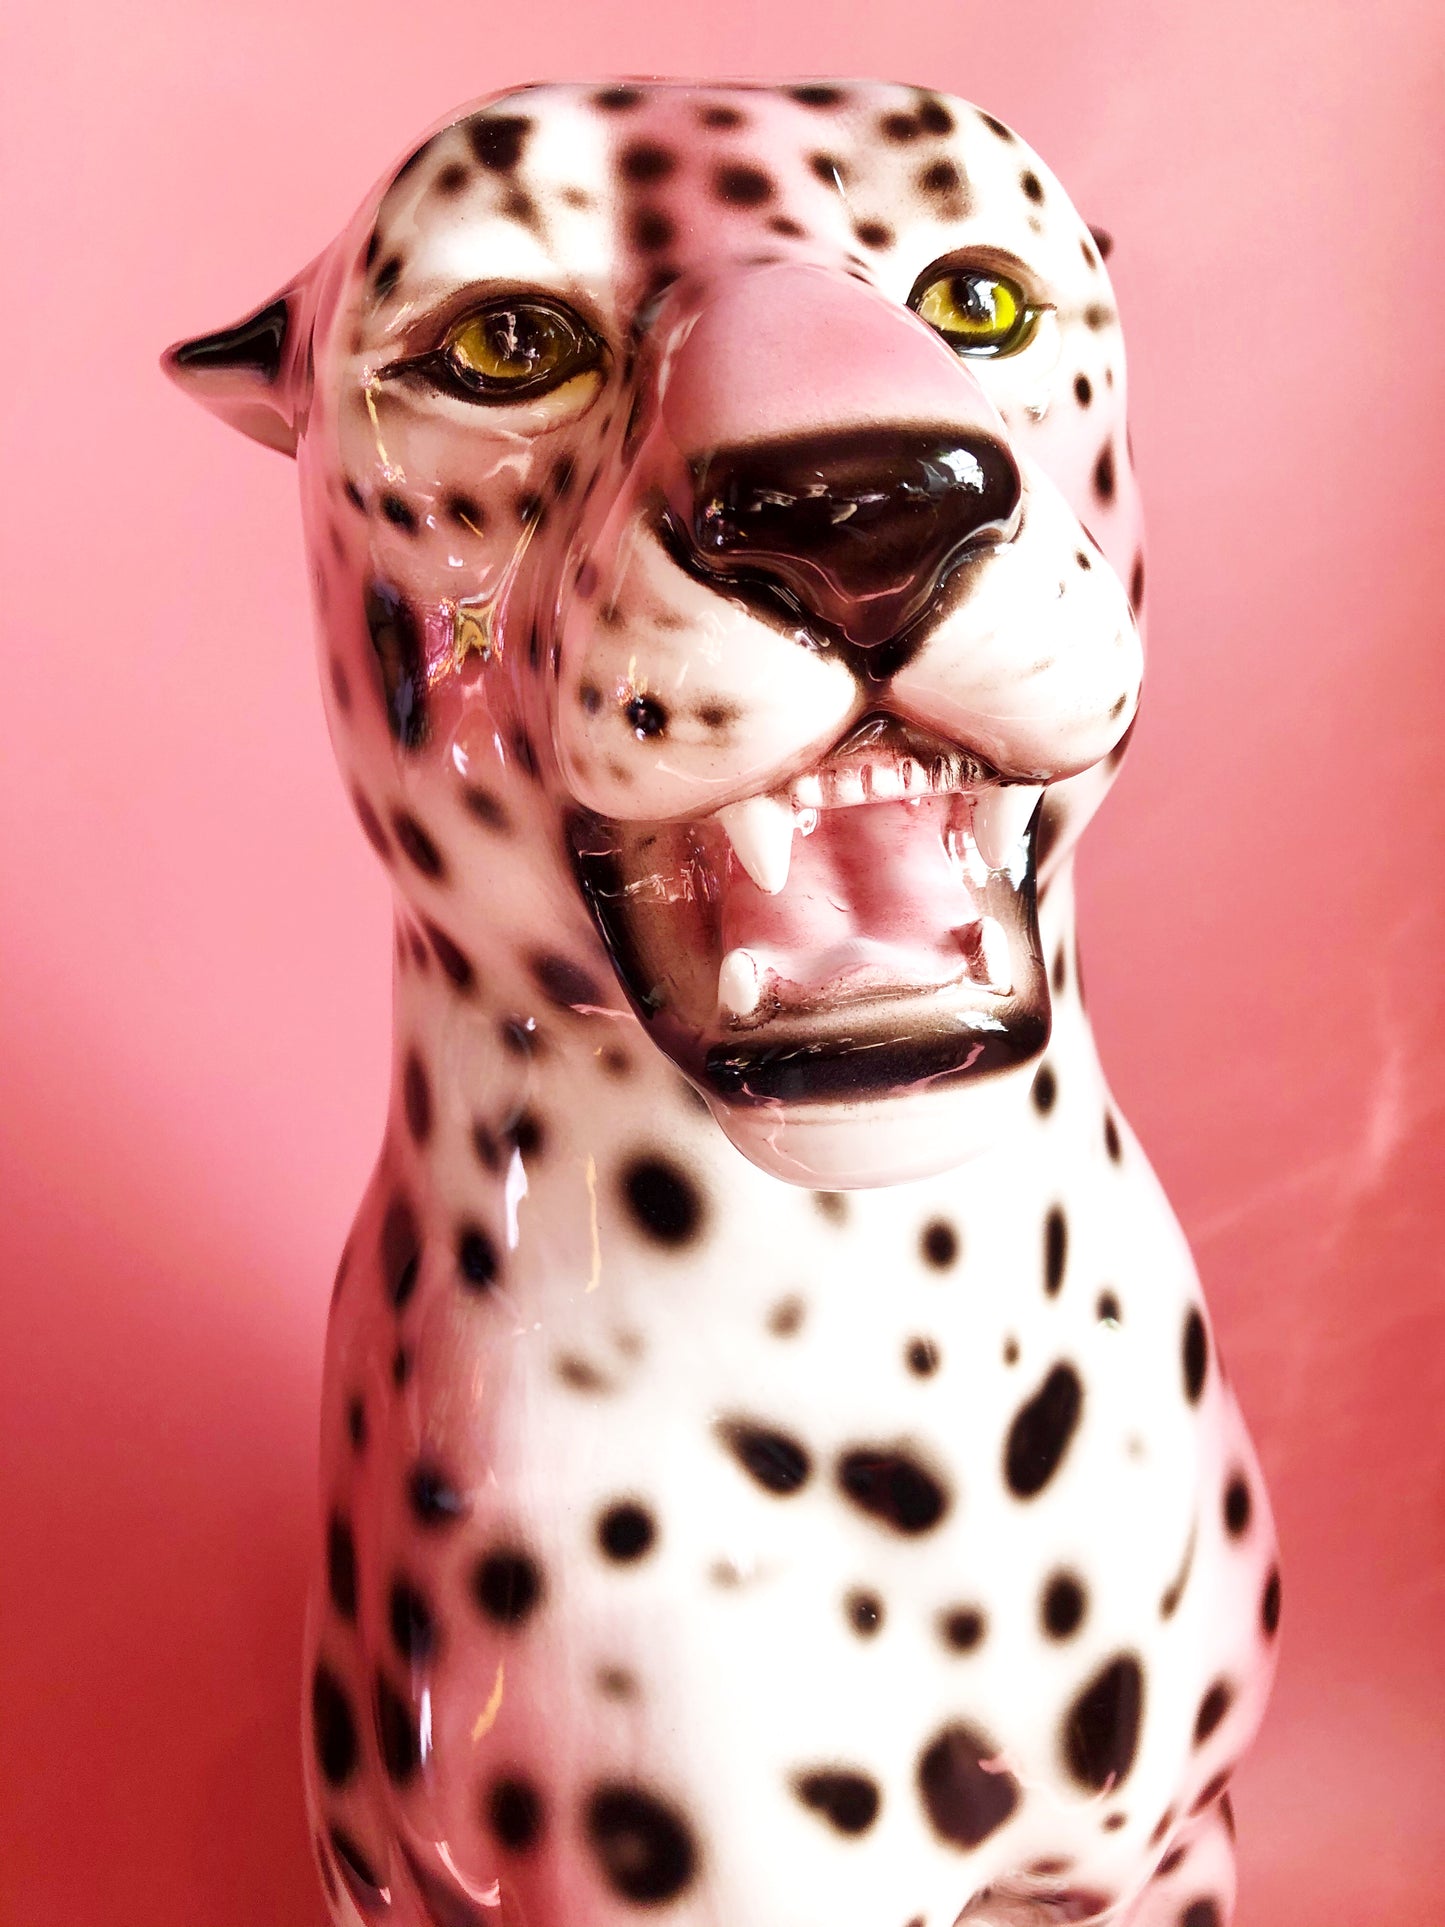 'Frenchie' PINK Large Ceramic Leopard Statue Vintage